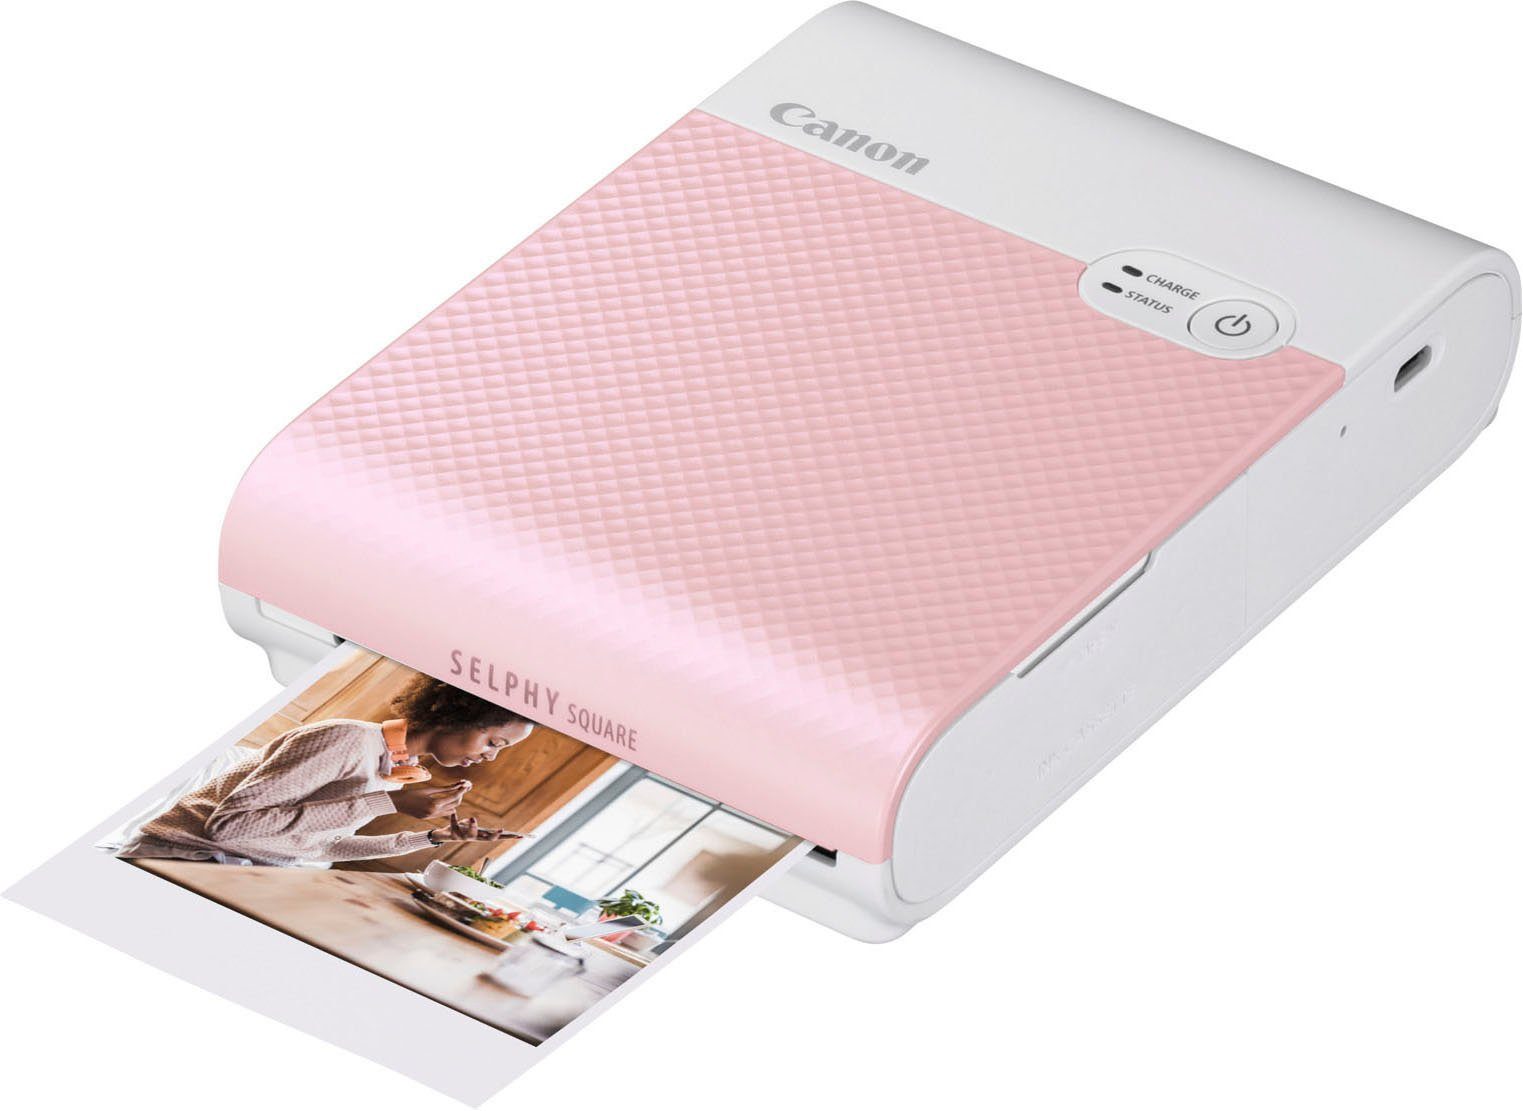 Fotodrucker, (WLAN Canon pink Square (Wi-Fi) SELPHY QX10